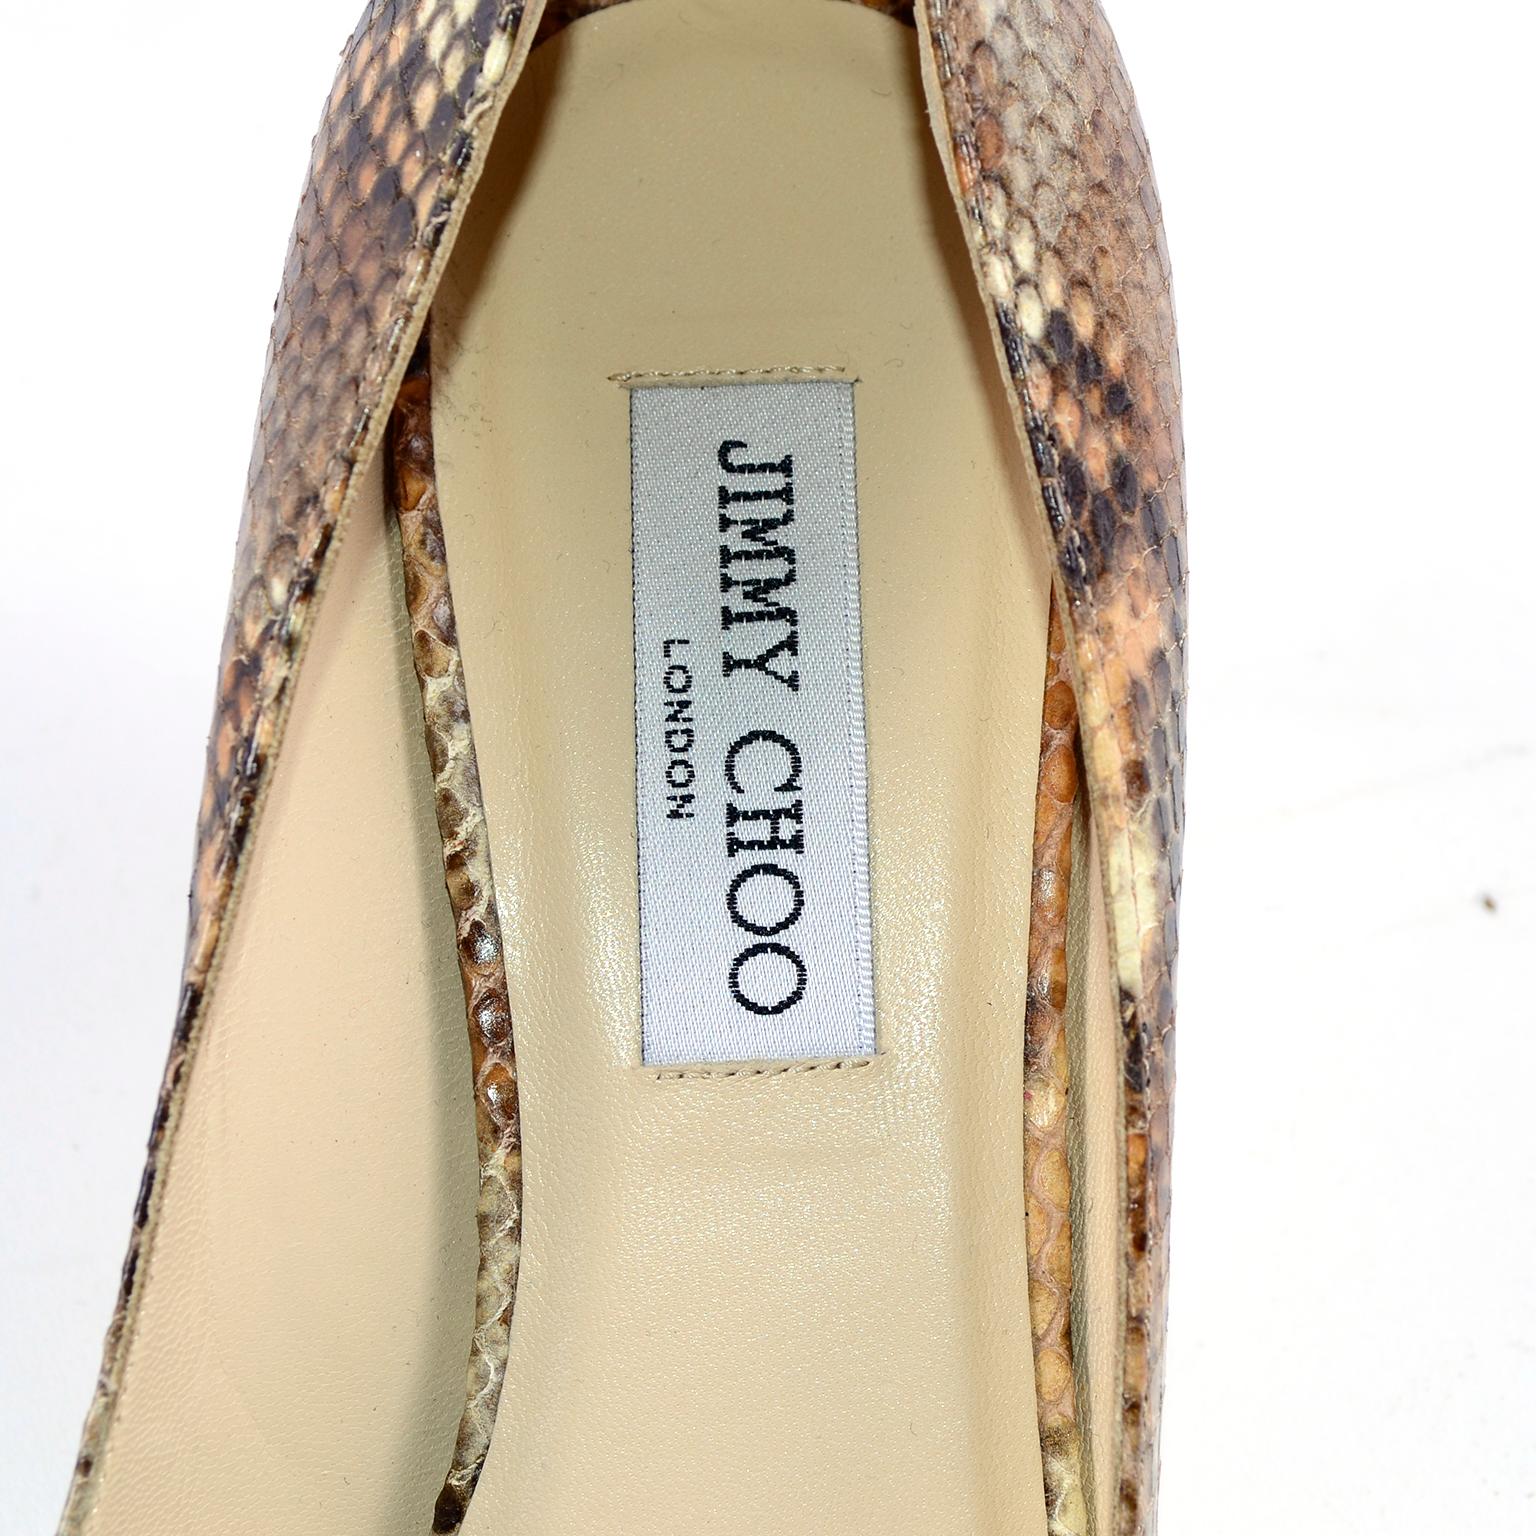 Jimmy Choo Isabel Python Snakeskin Peep Toe Kitten Heel Shoes Size 38.5 3